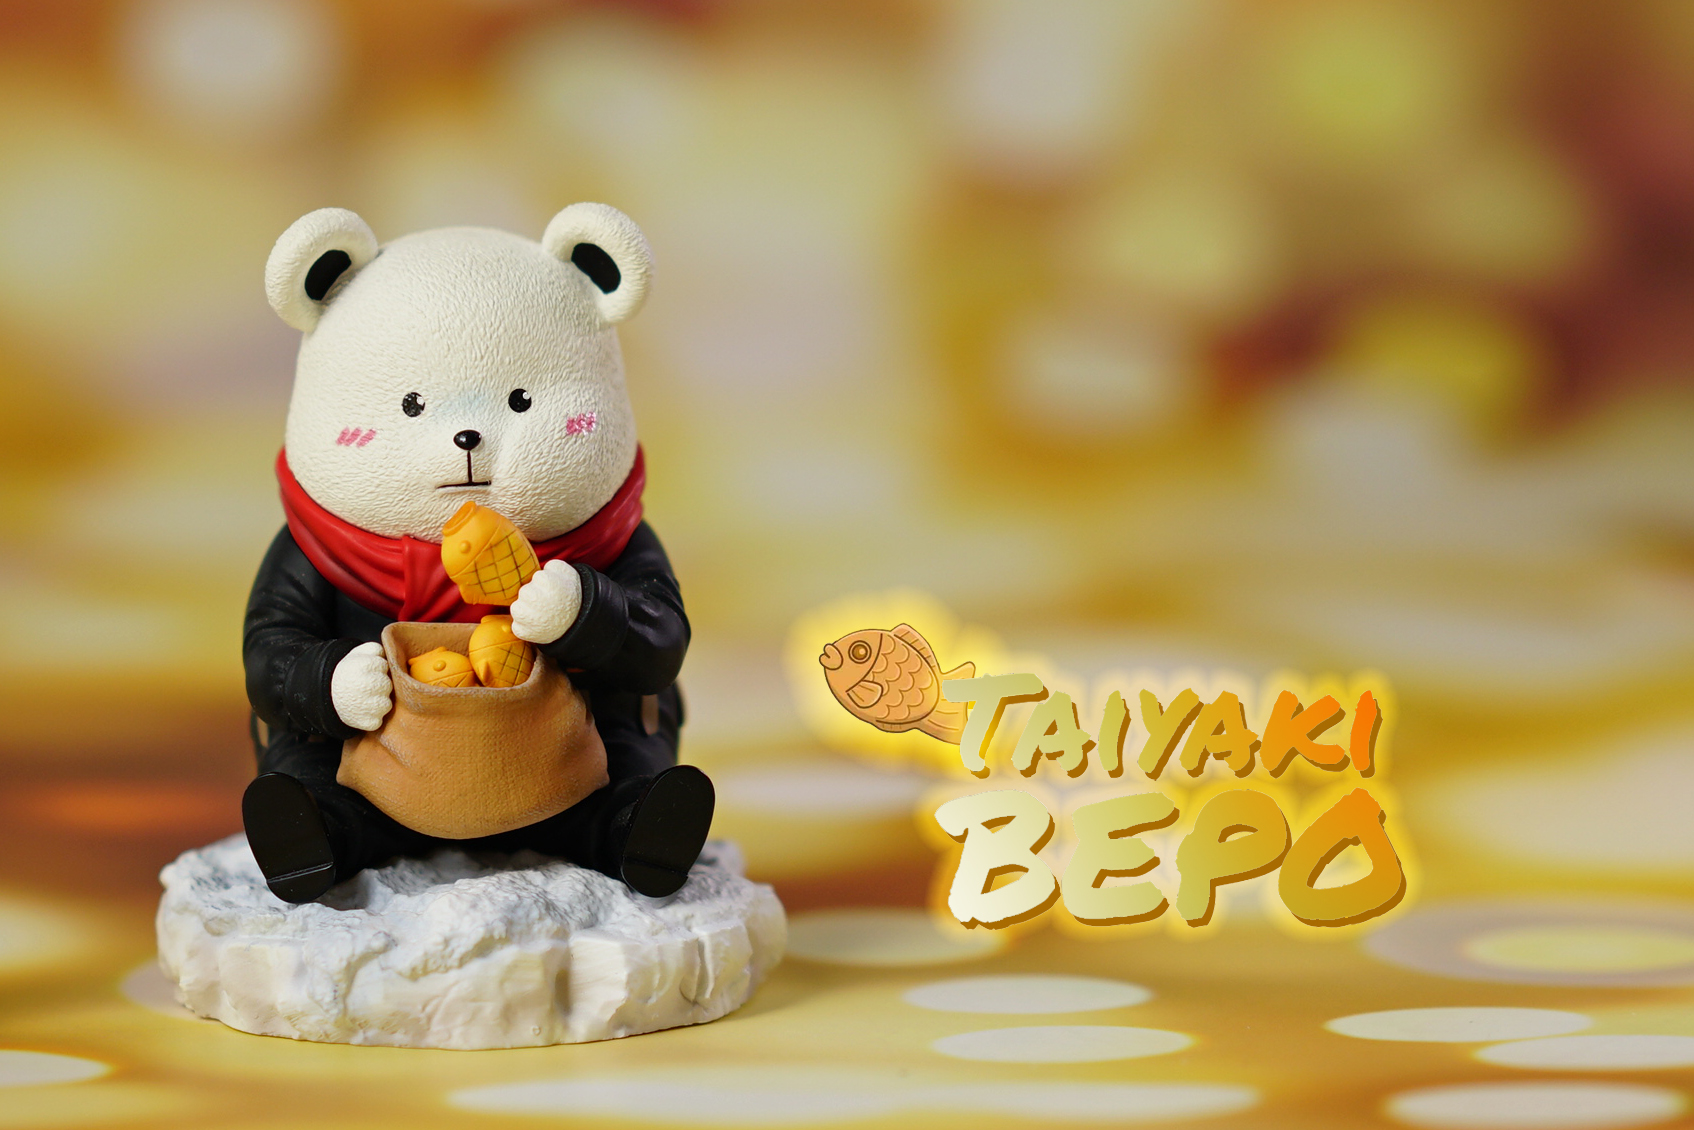 Black BEPO น้องหมี x ขนมไทยากิ  A+ Studio (มัดจำ) [[SOLD OUT]]